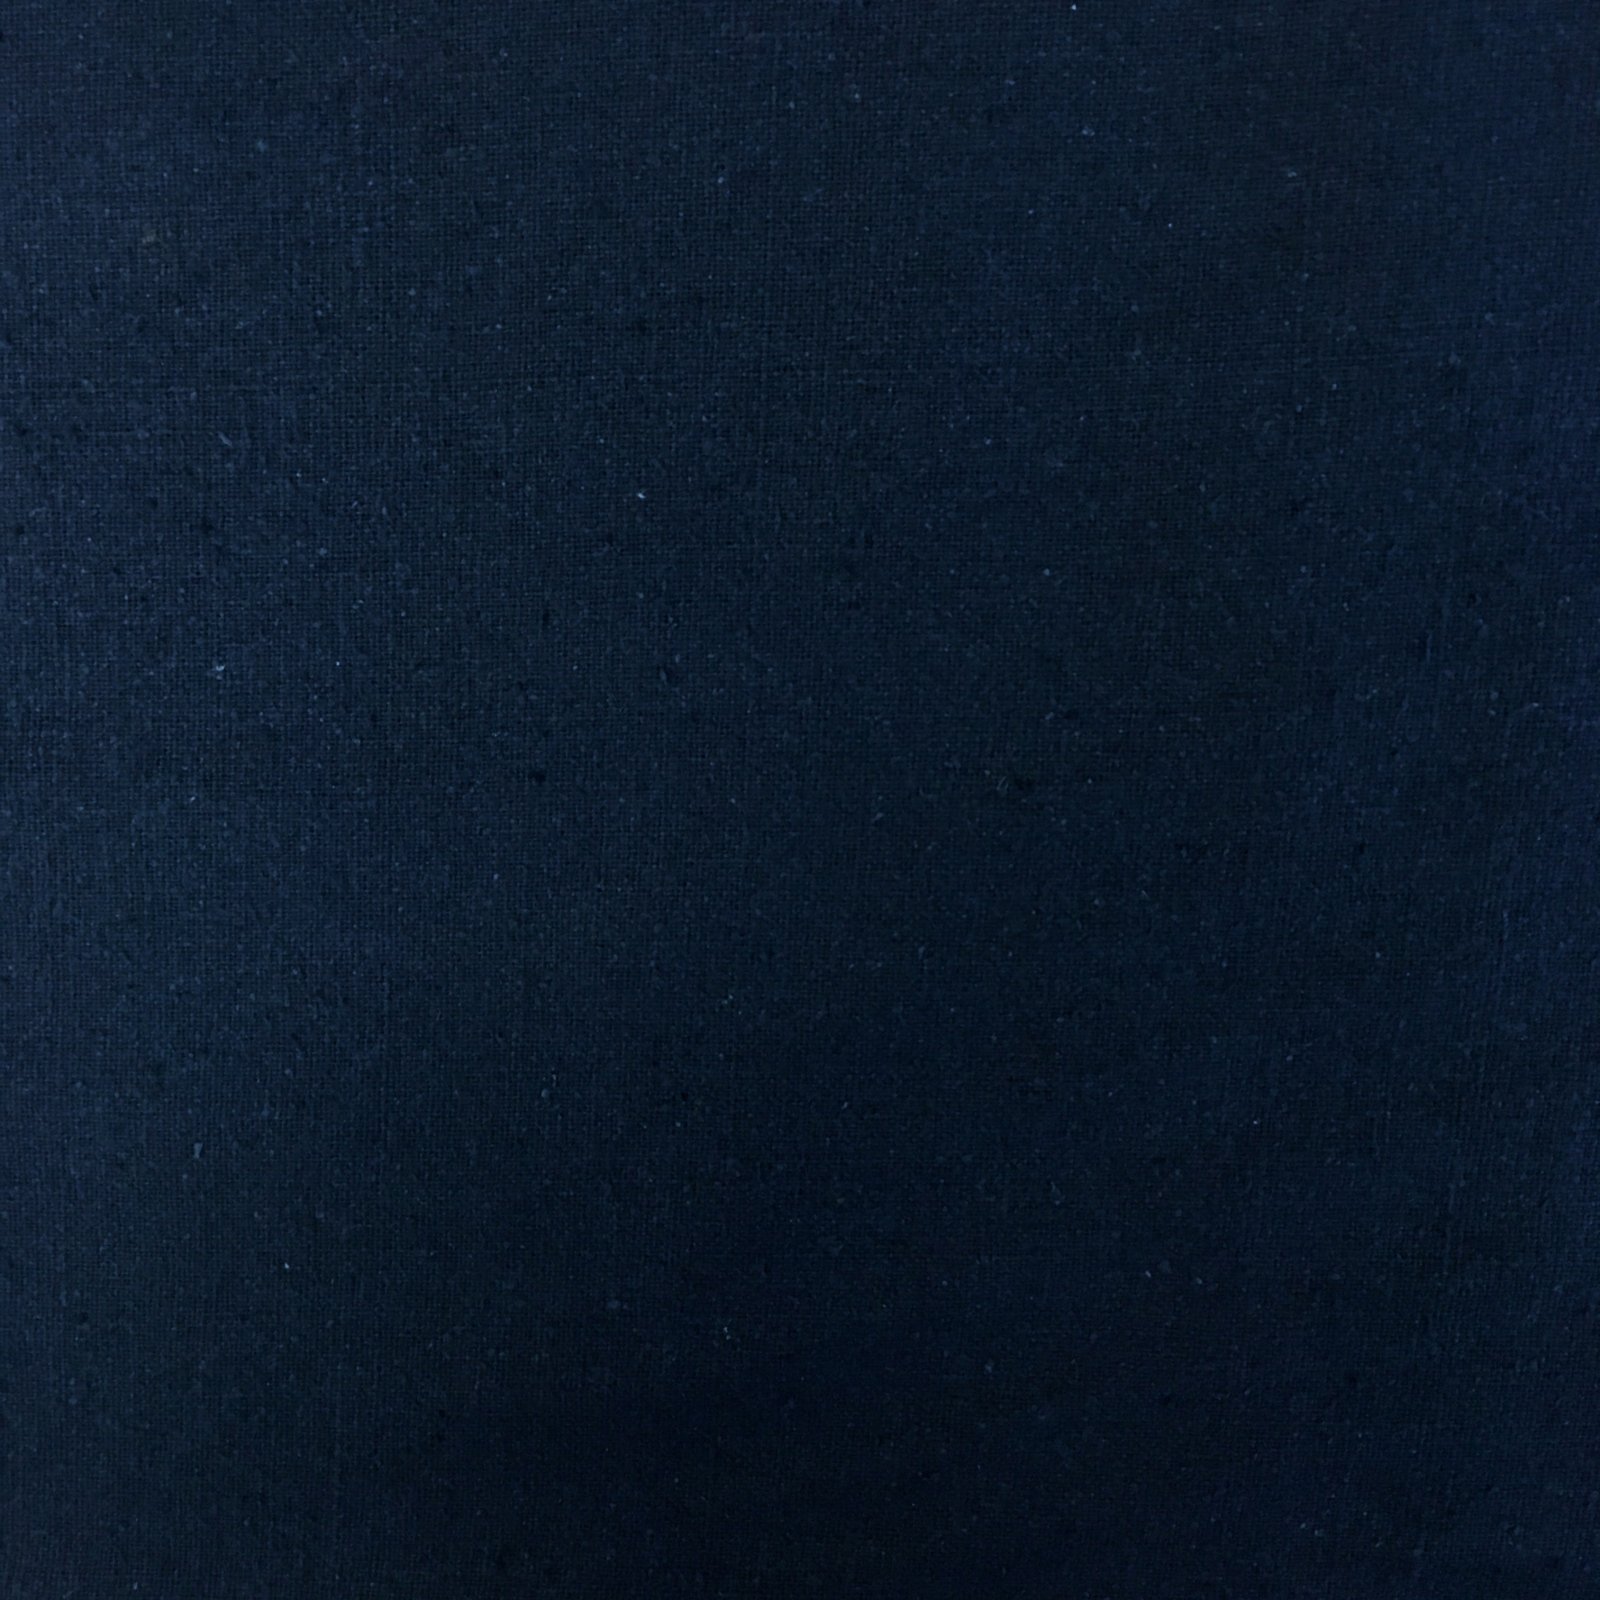 CERULEAN BLUE Hand Dyed Raw Silk NOIL Fabric 